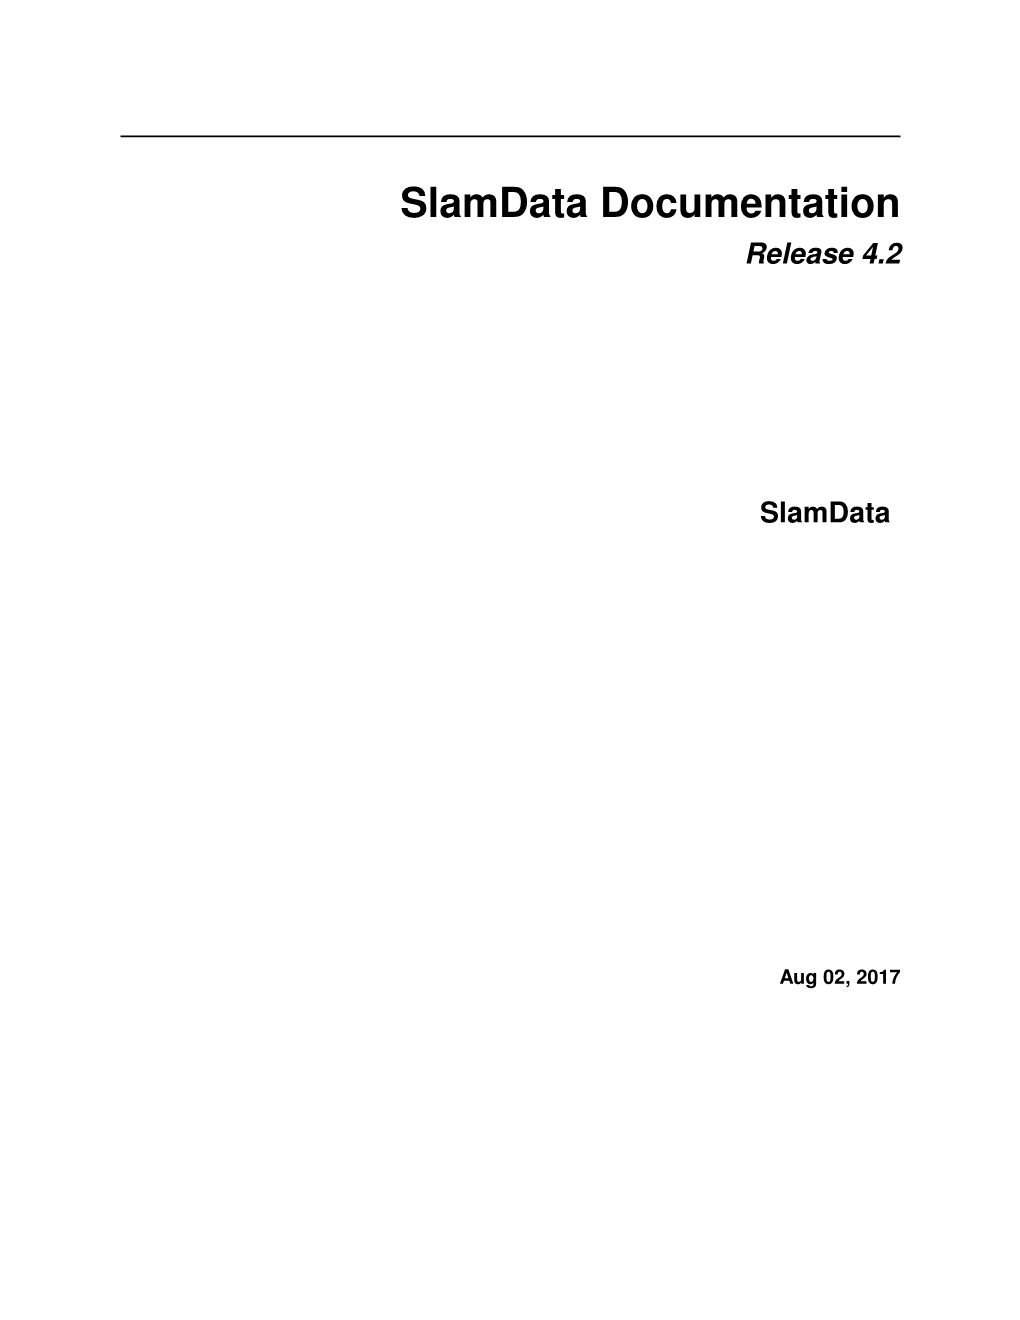 Slamdata Documentation Release 4.2